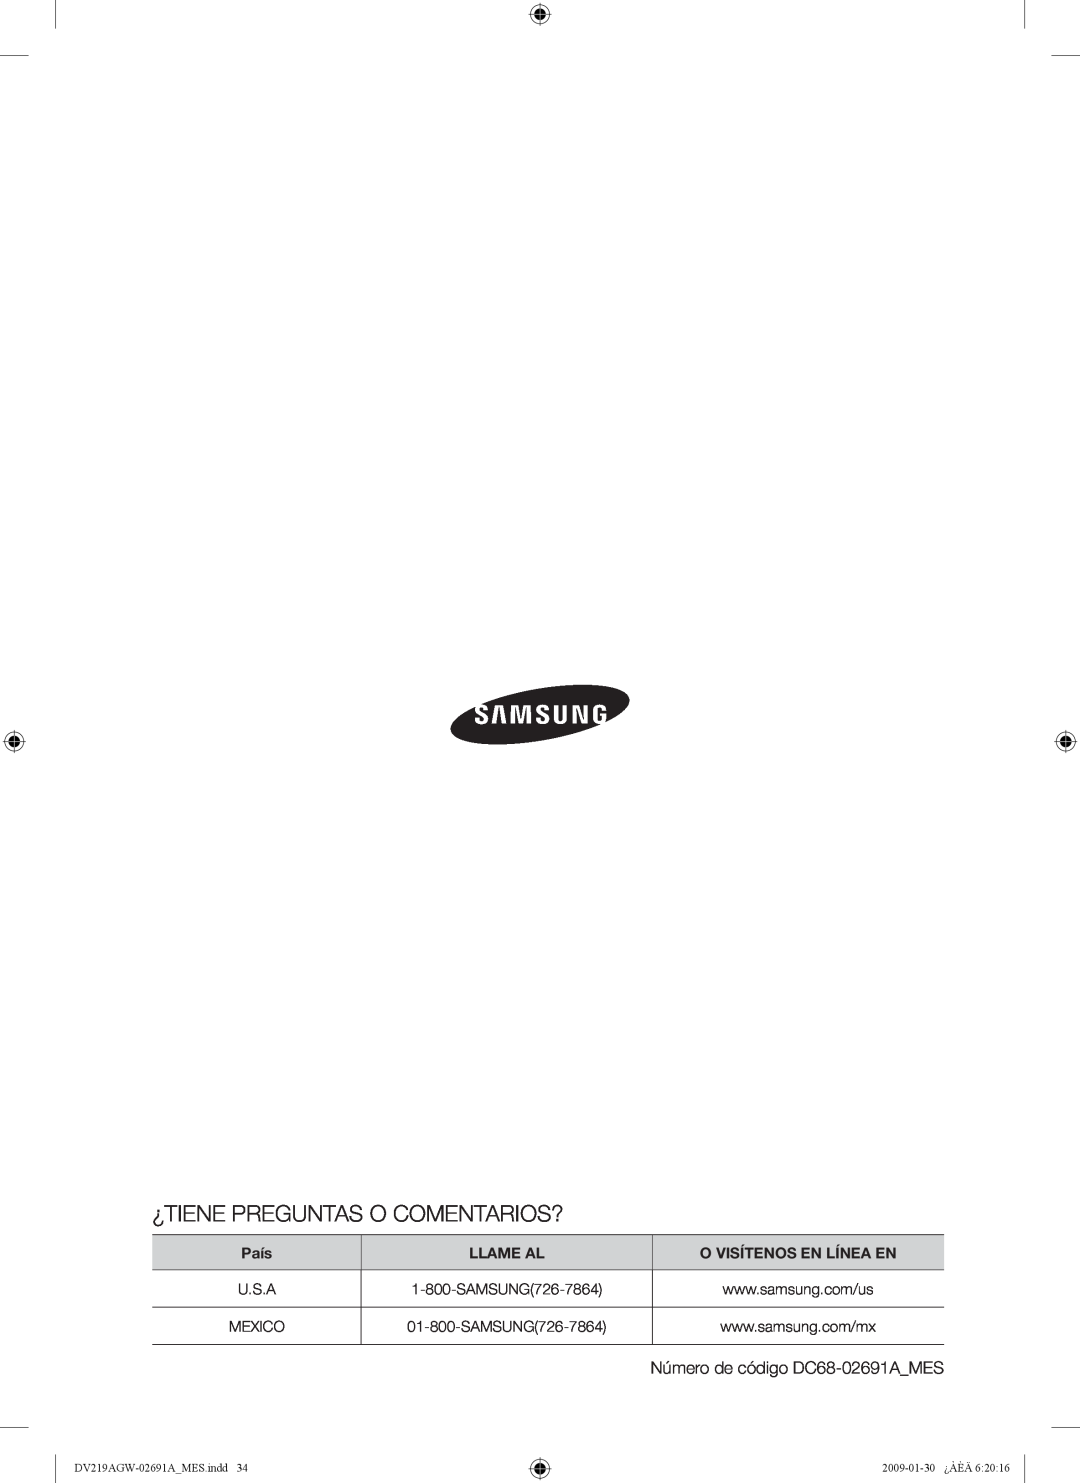 Samsung DV219AG* ¿Tiene Preguntas O Comentarios?, U.S.A, SAMSUNG726-7864, DV219AGW-02691AMES.indd, 2009-01-30 ¿ÀÈÄ 